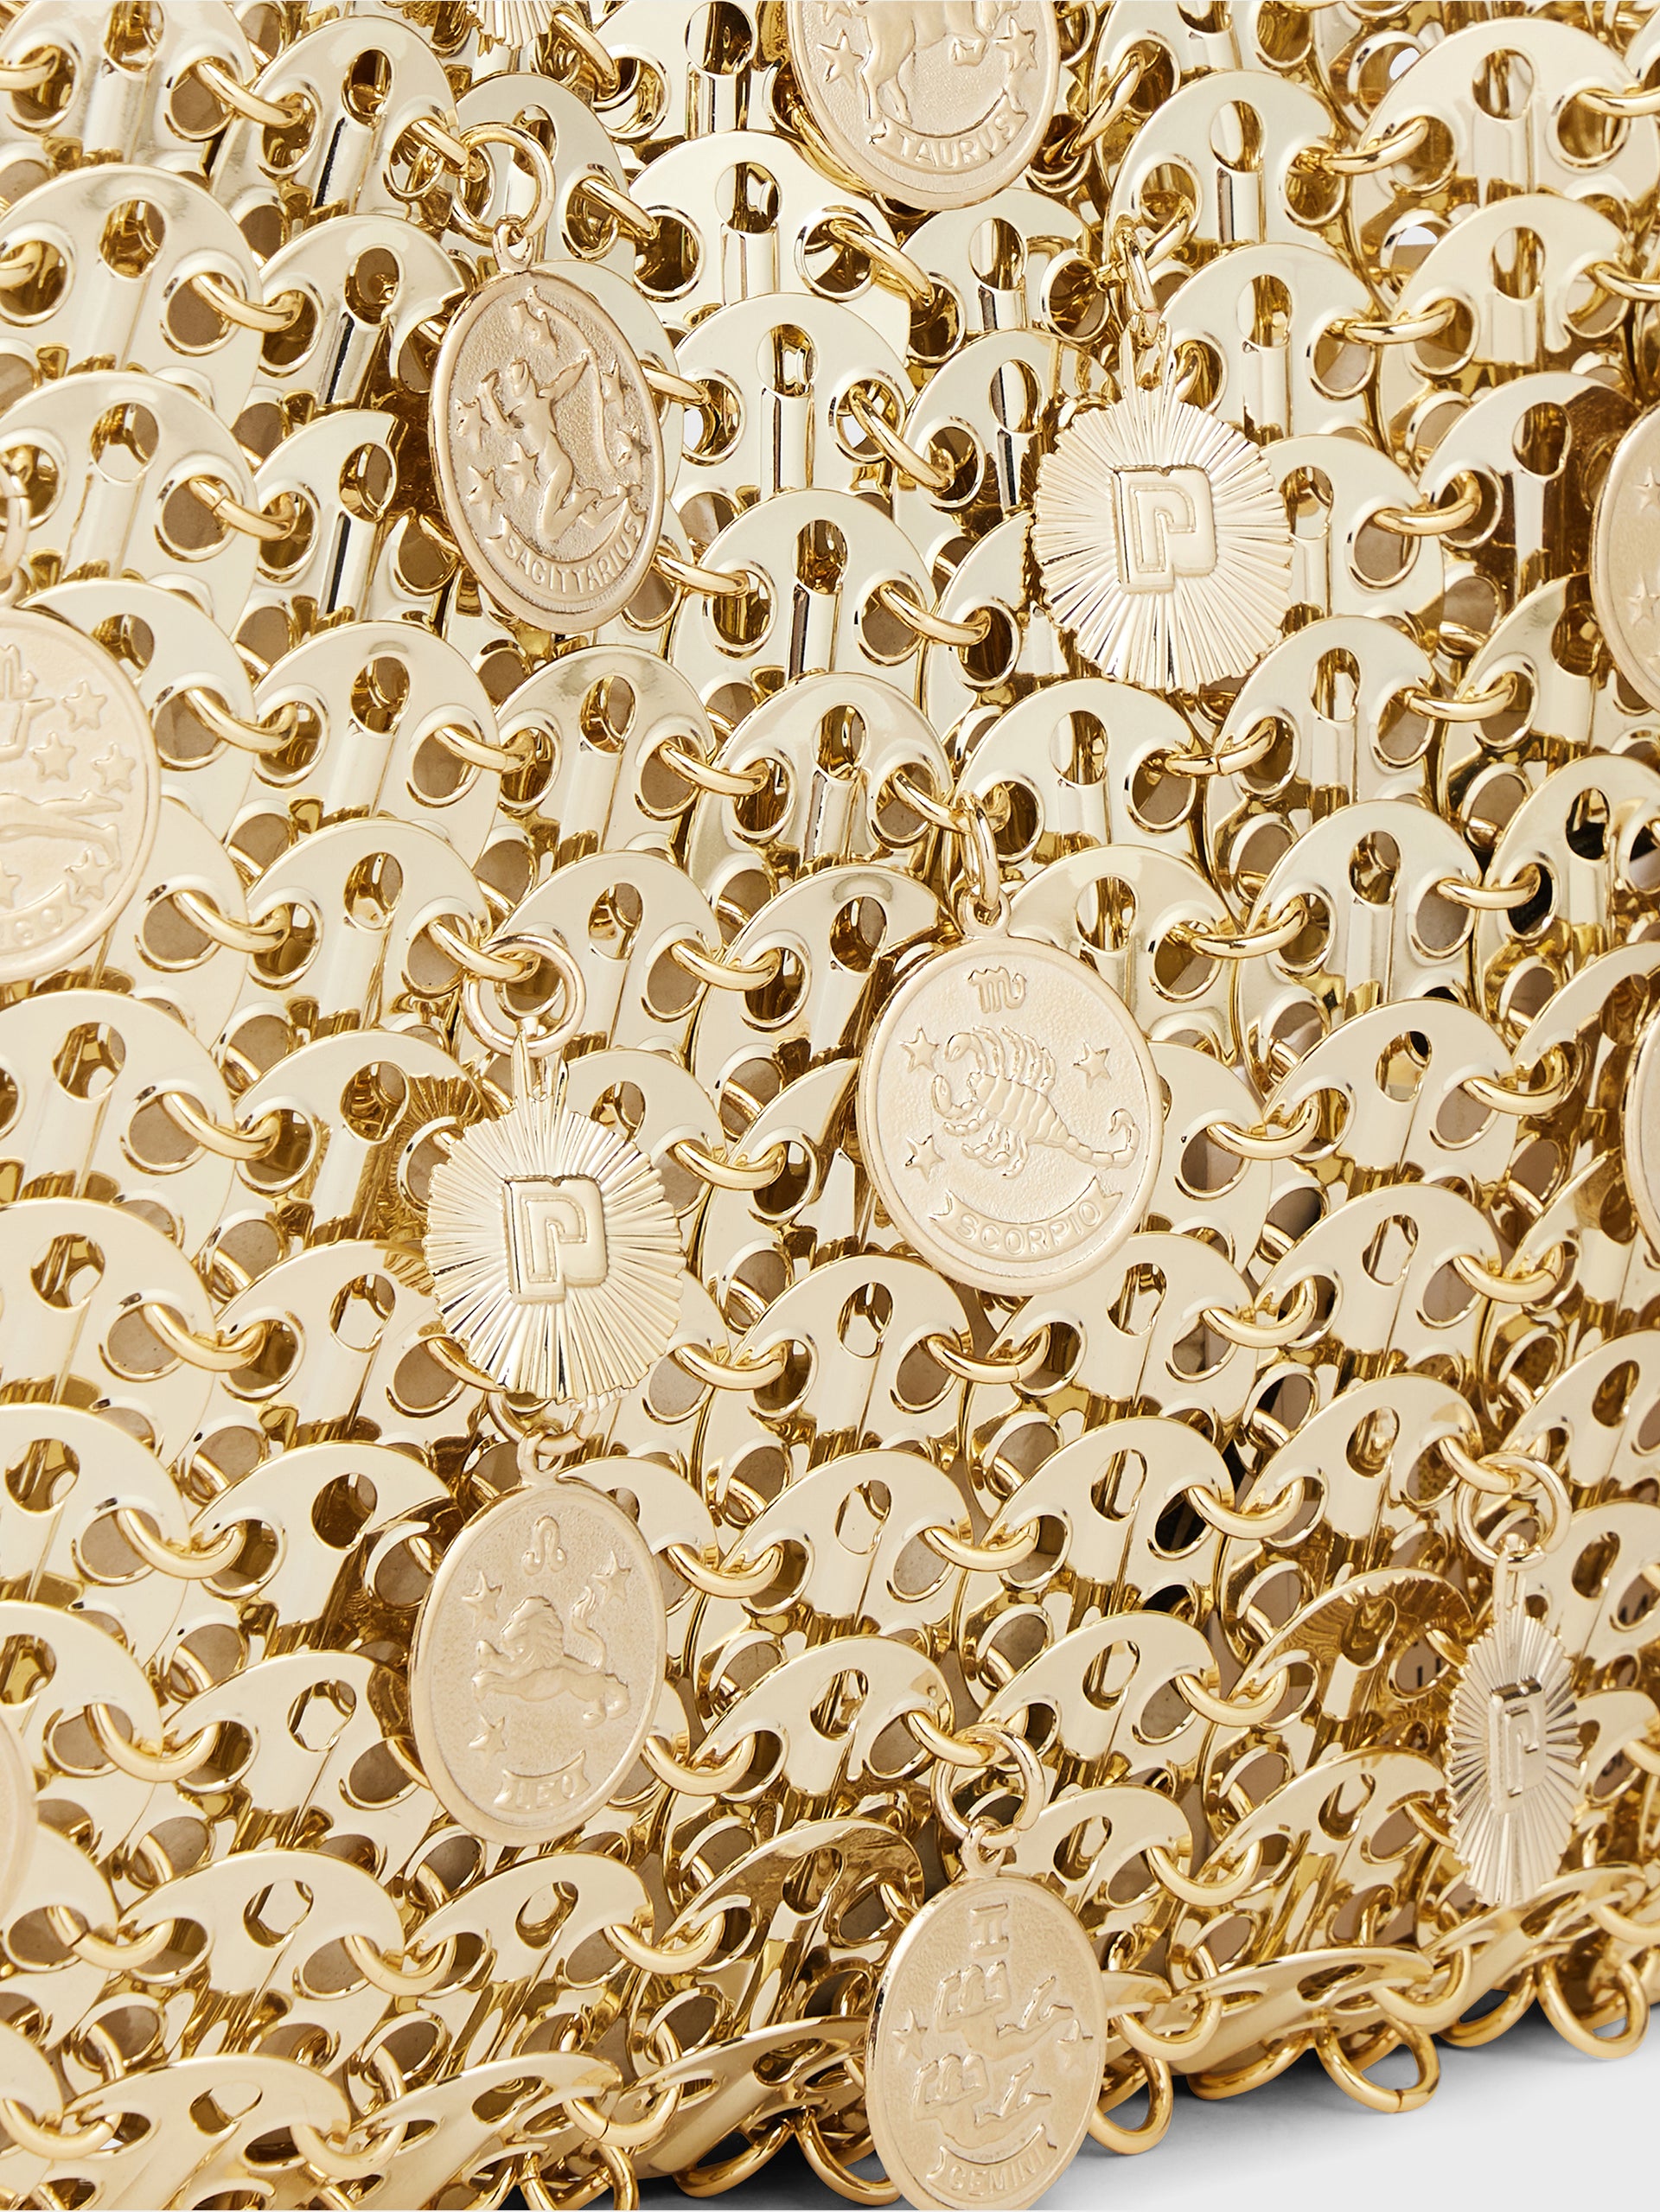 1969 Gold nano bag with zodiac medals